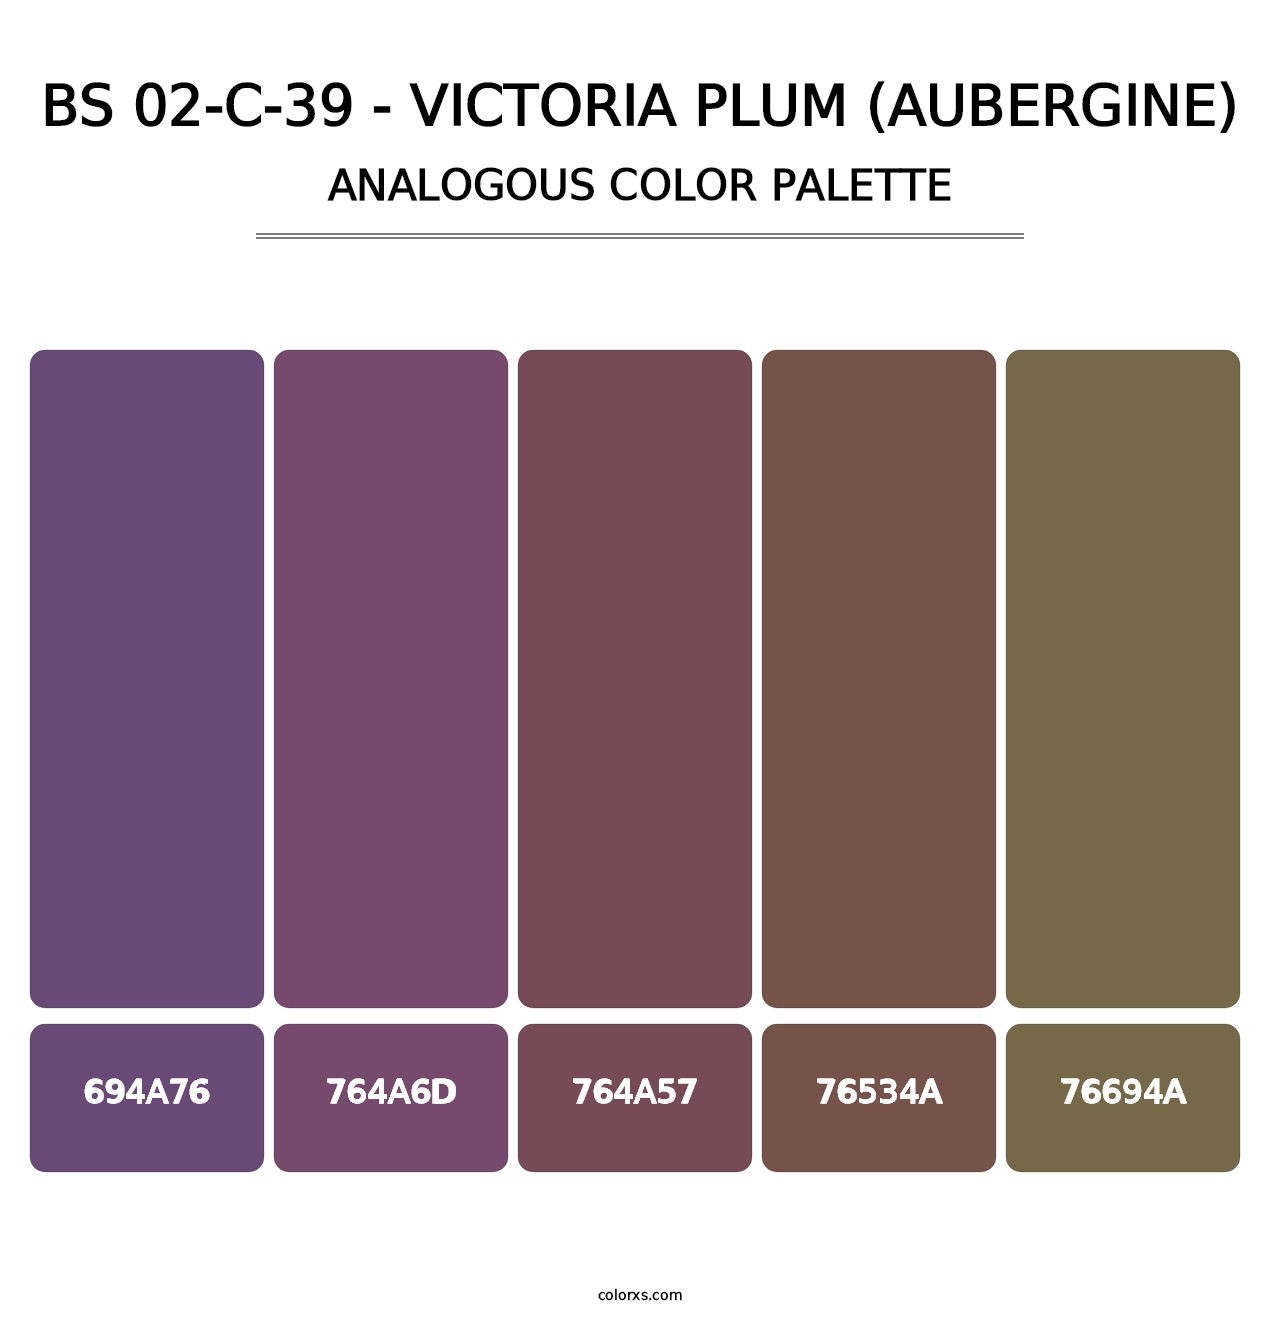 BS 02-C-39 - Victoria Plum (Aubergine) - Analogous Color Palette